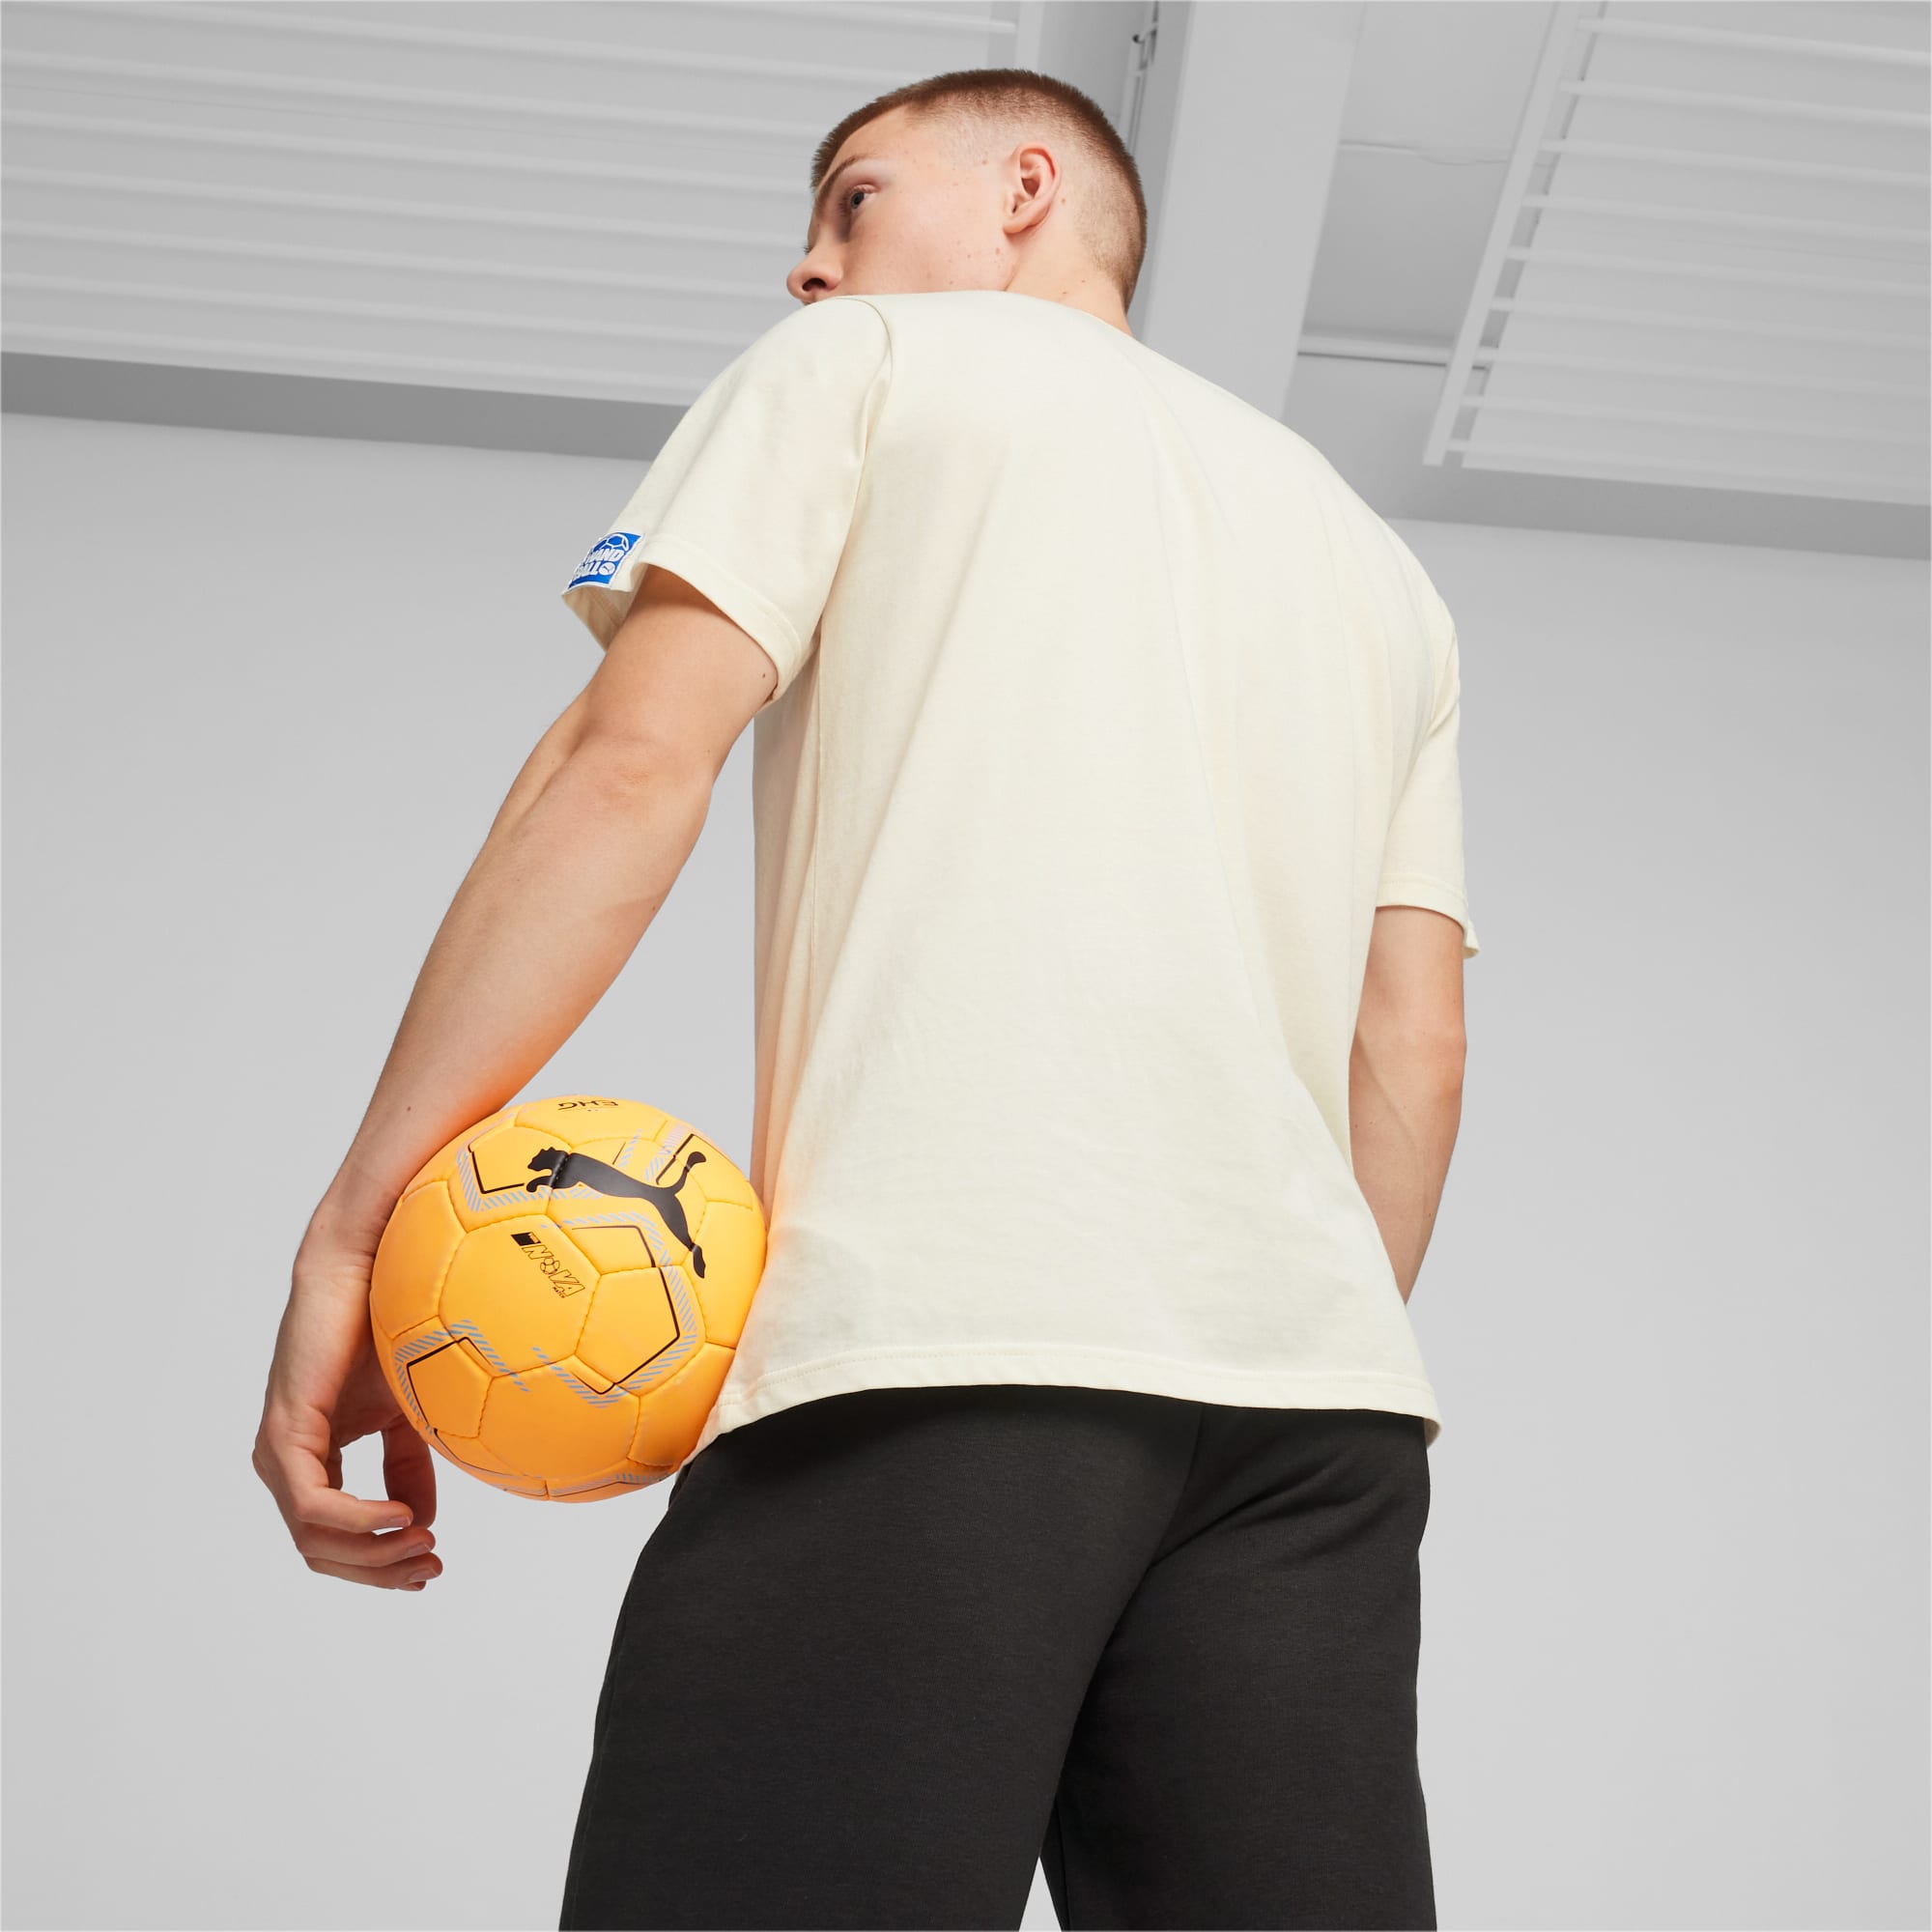 PUMA Handball T-Shirt Men, Sugared Almond/Black